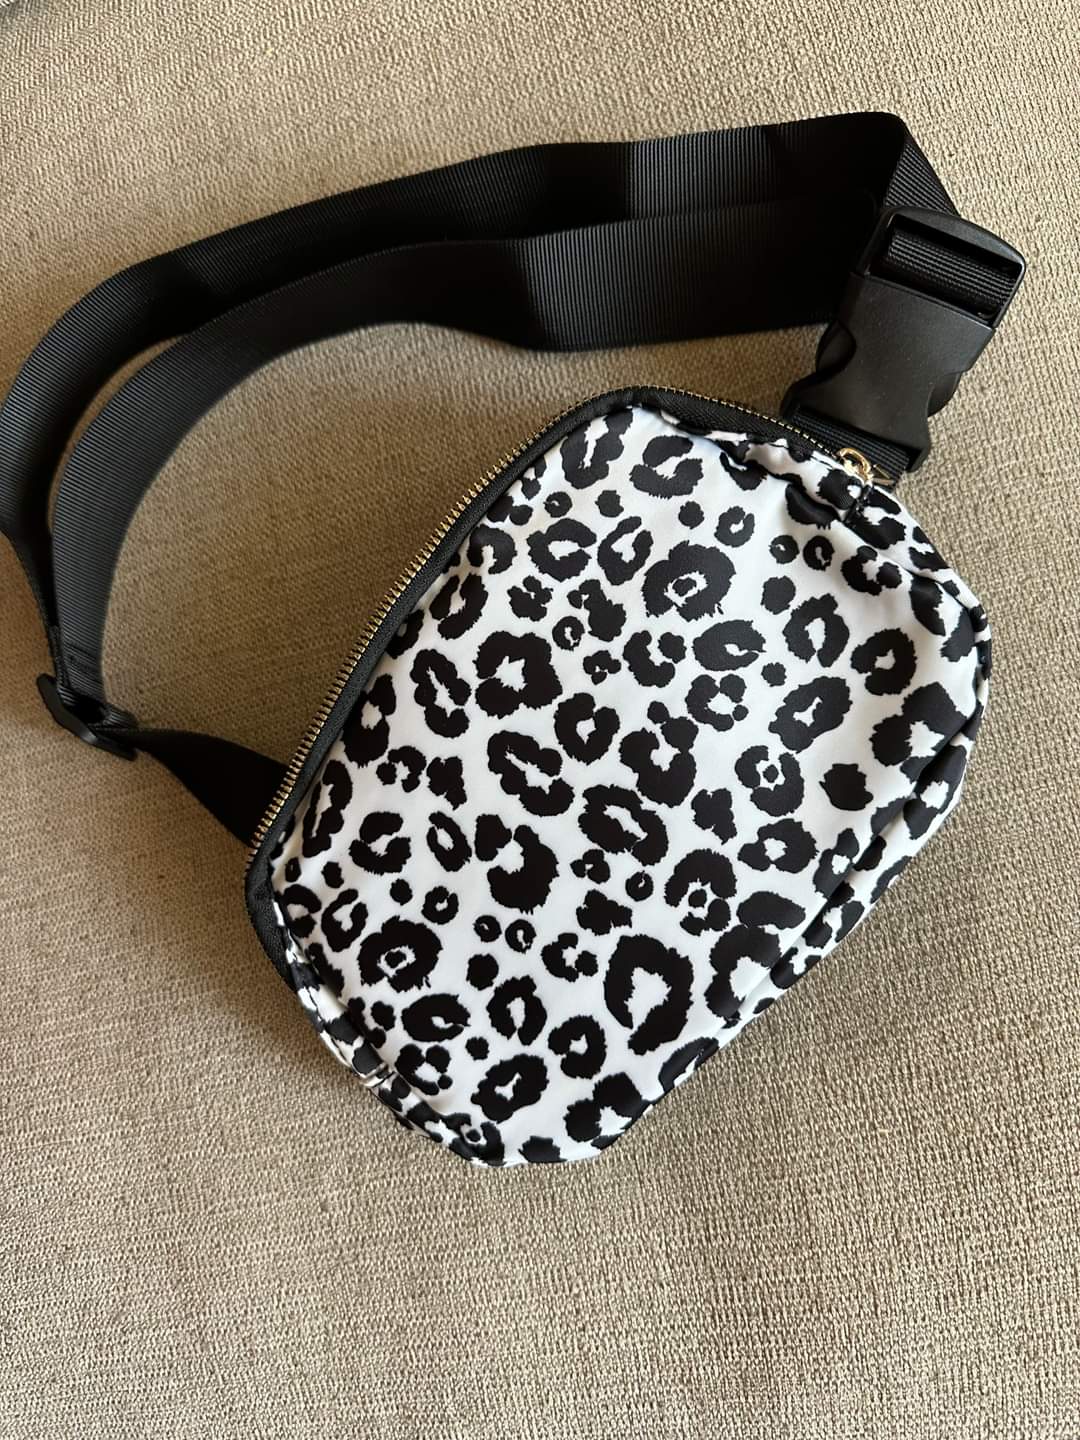 Leopard Buckle Bags - #5781-5783